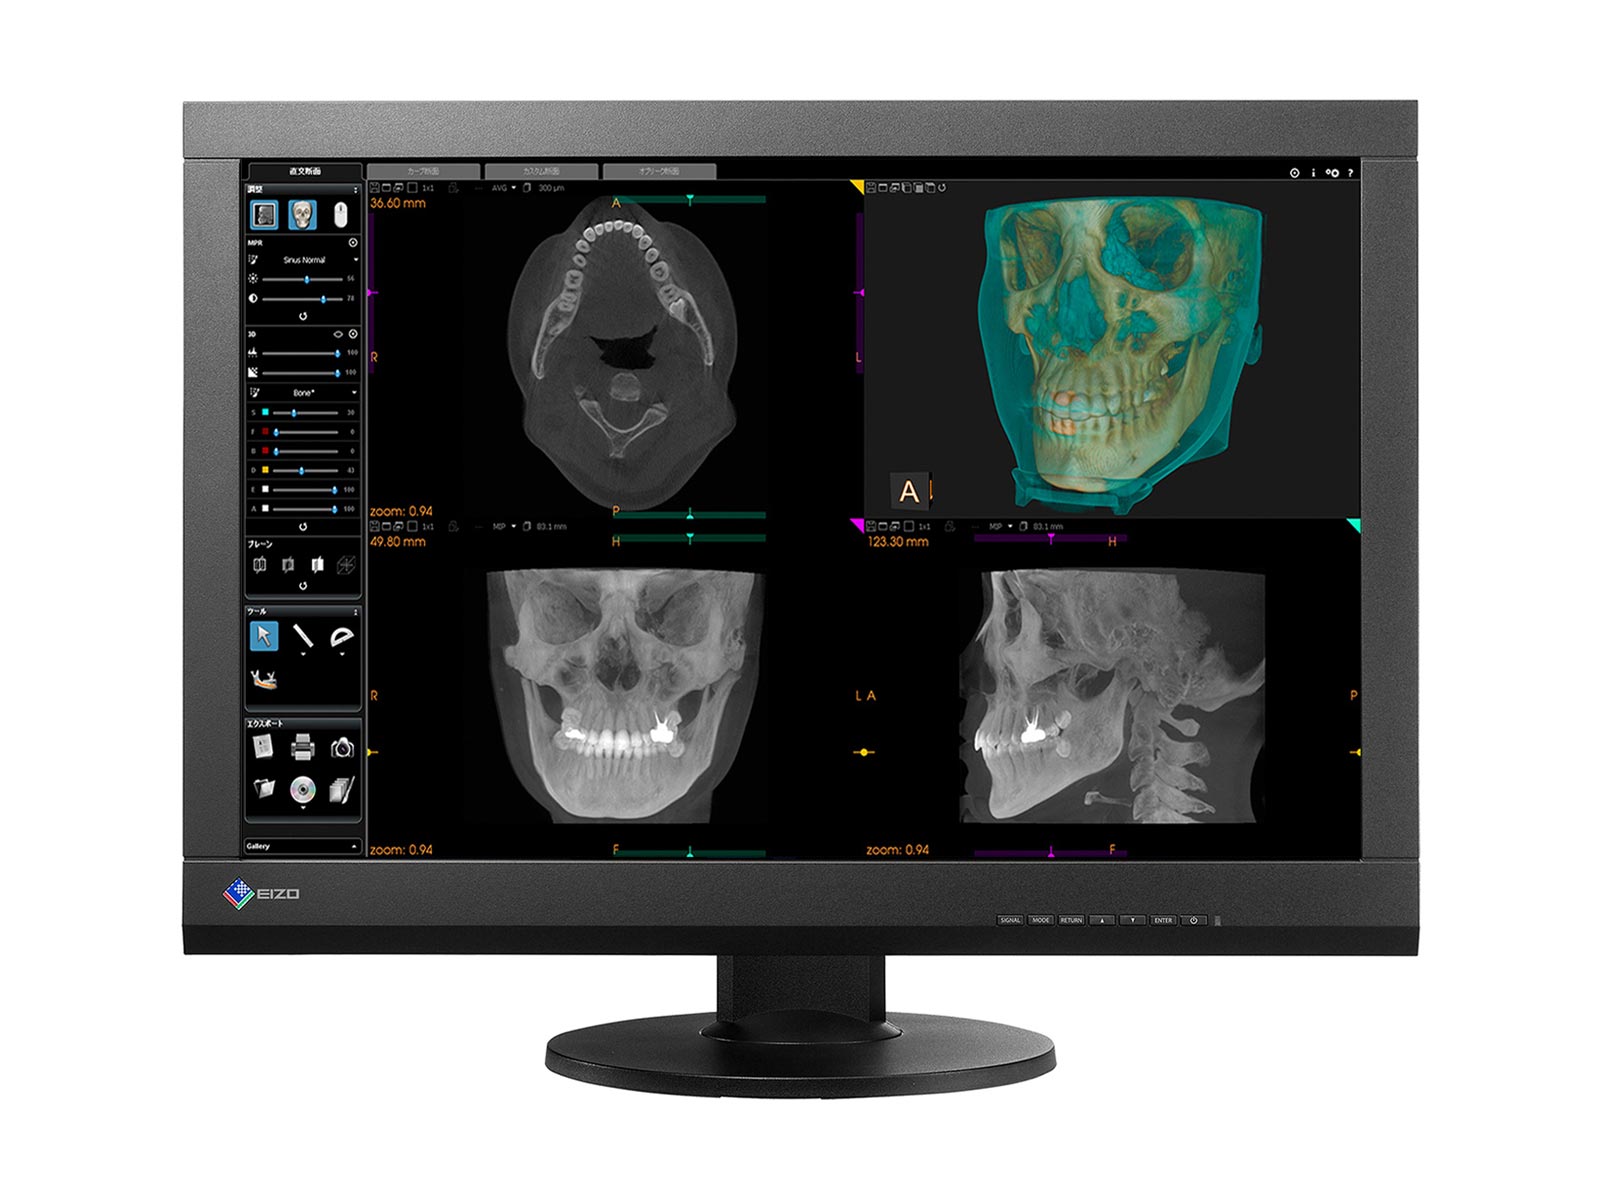 Eizo RadiForce MX242W 2.3MP 24" Color LED Clinical Review Display (MX242W-BK) Monitors.com 